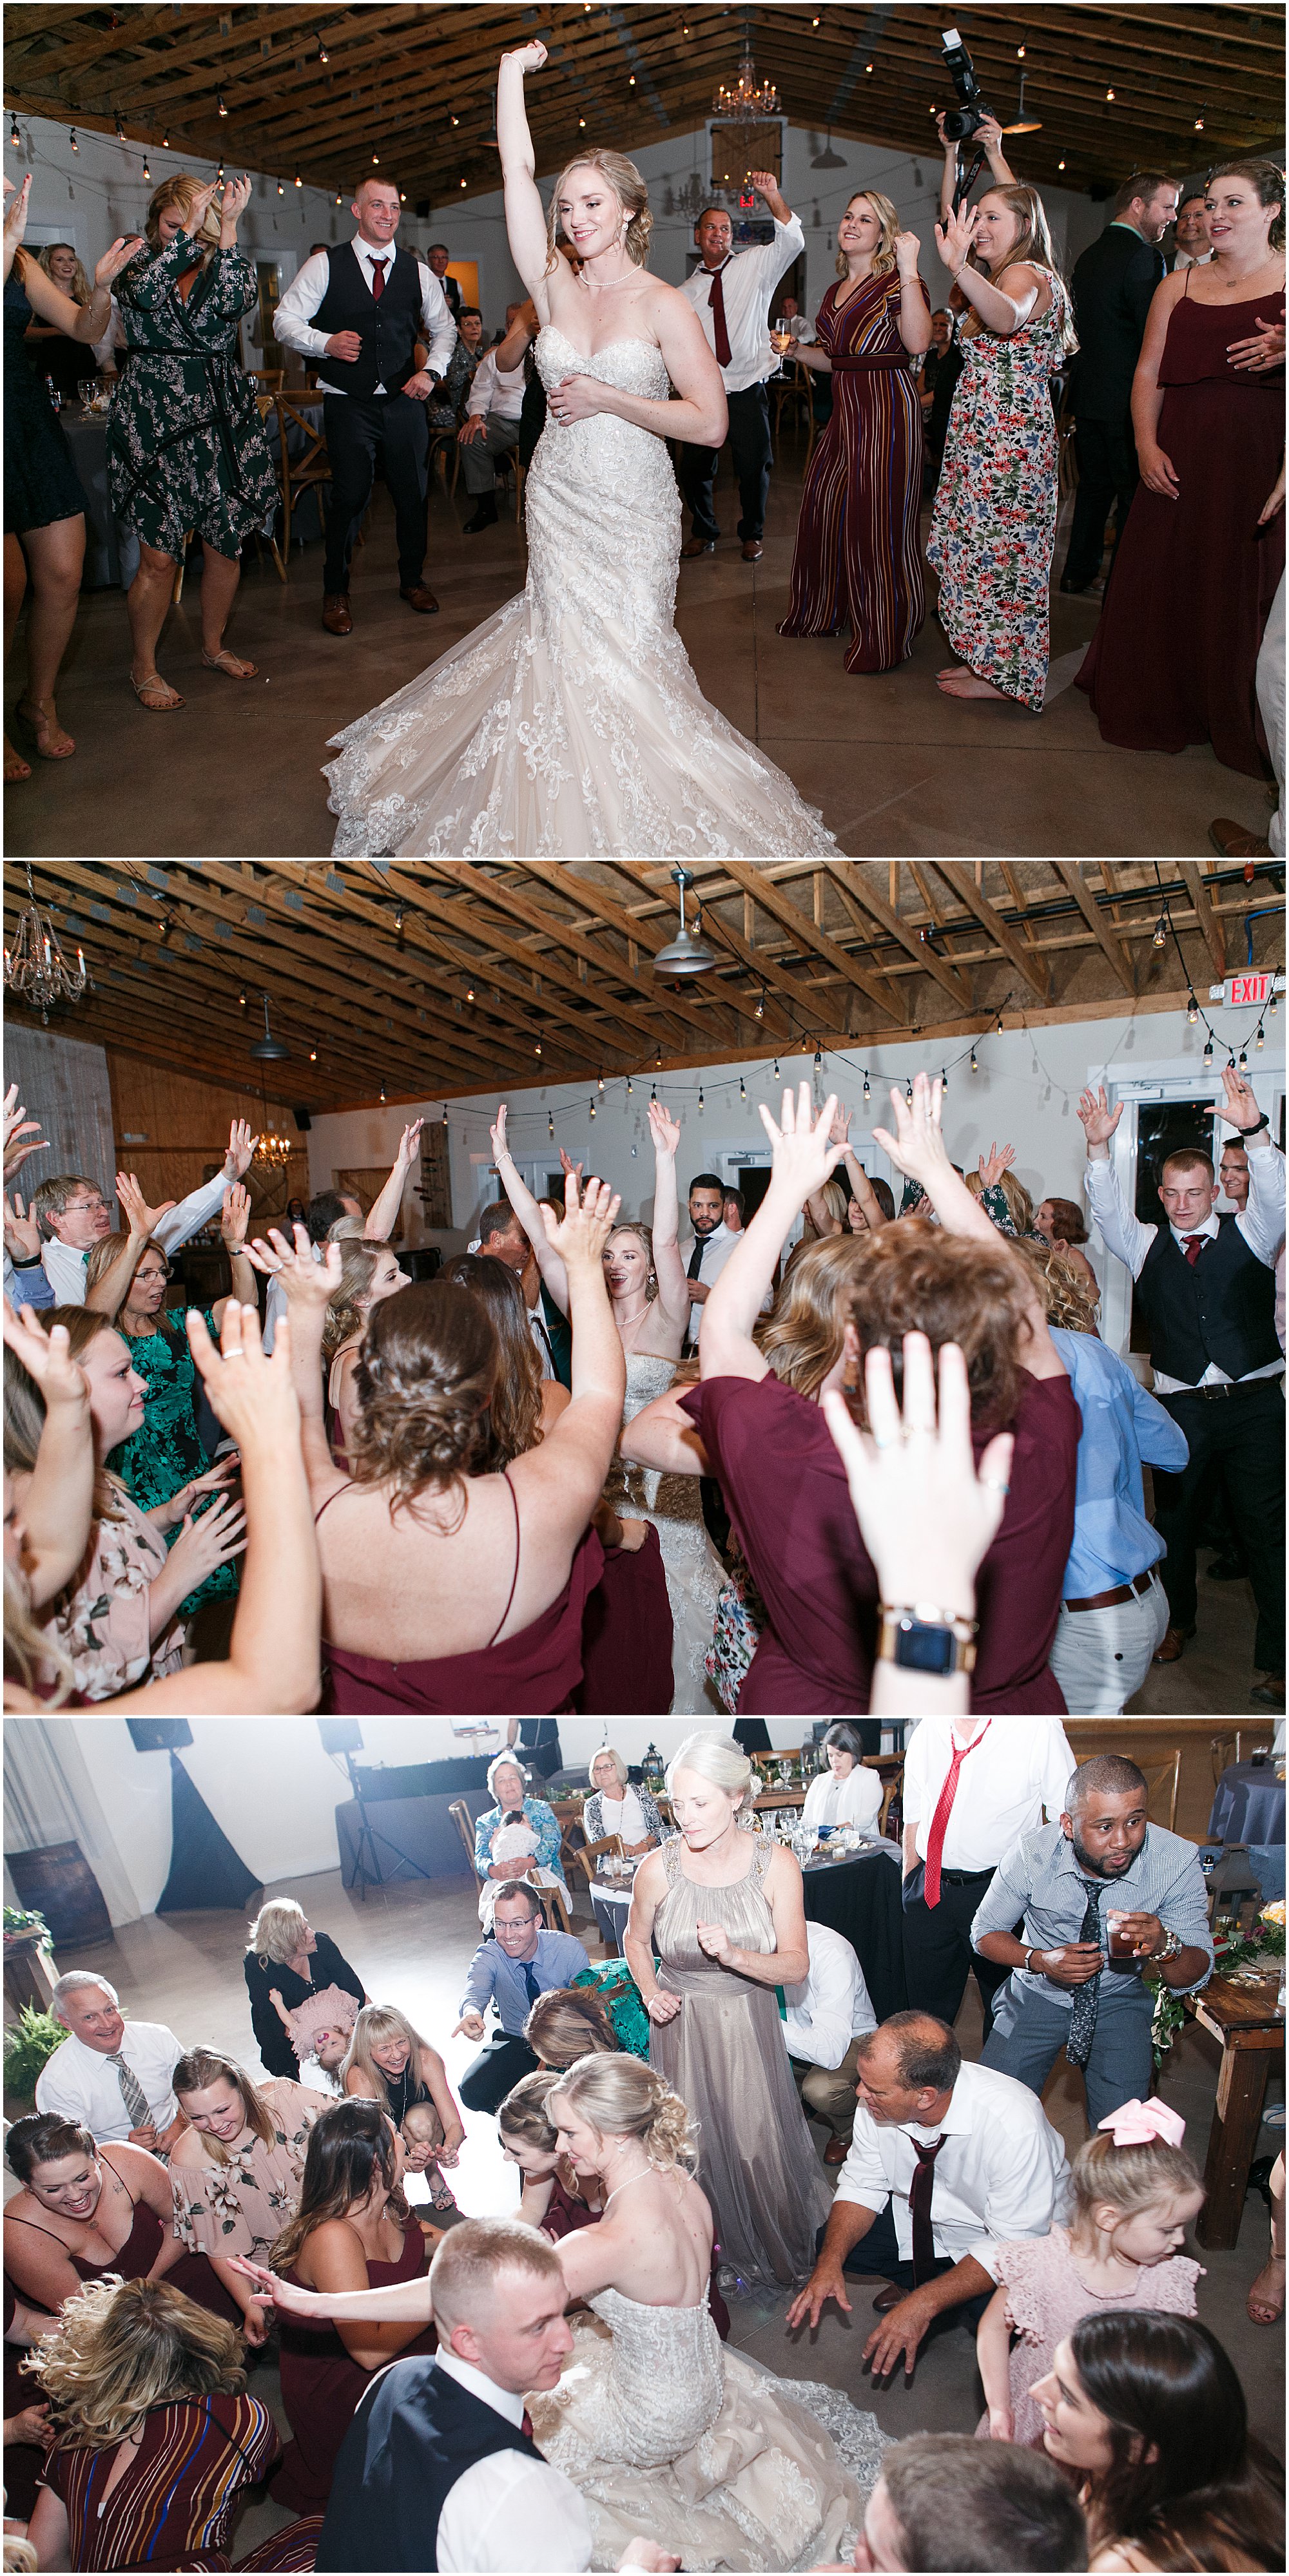 Bride dancing with guests at wedding reception. 